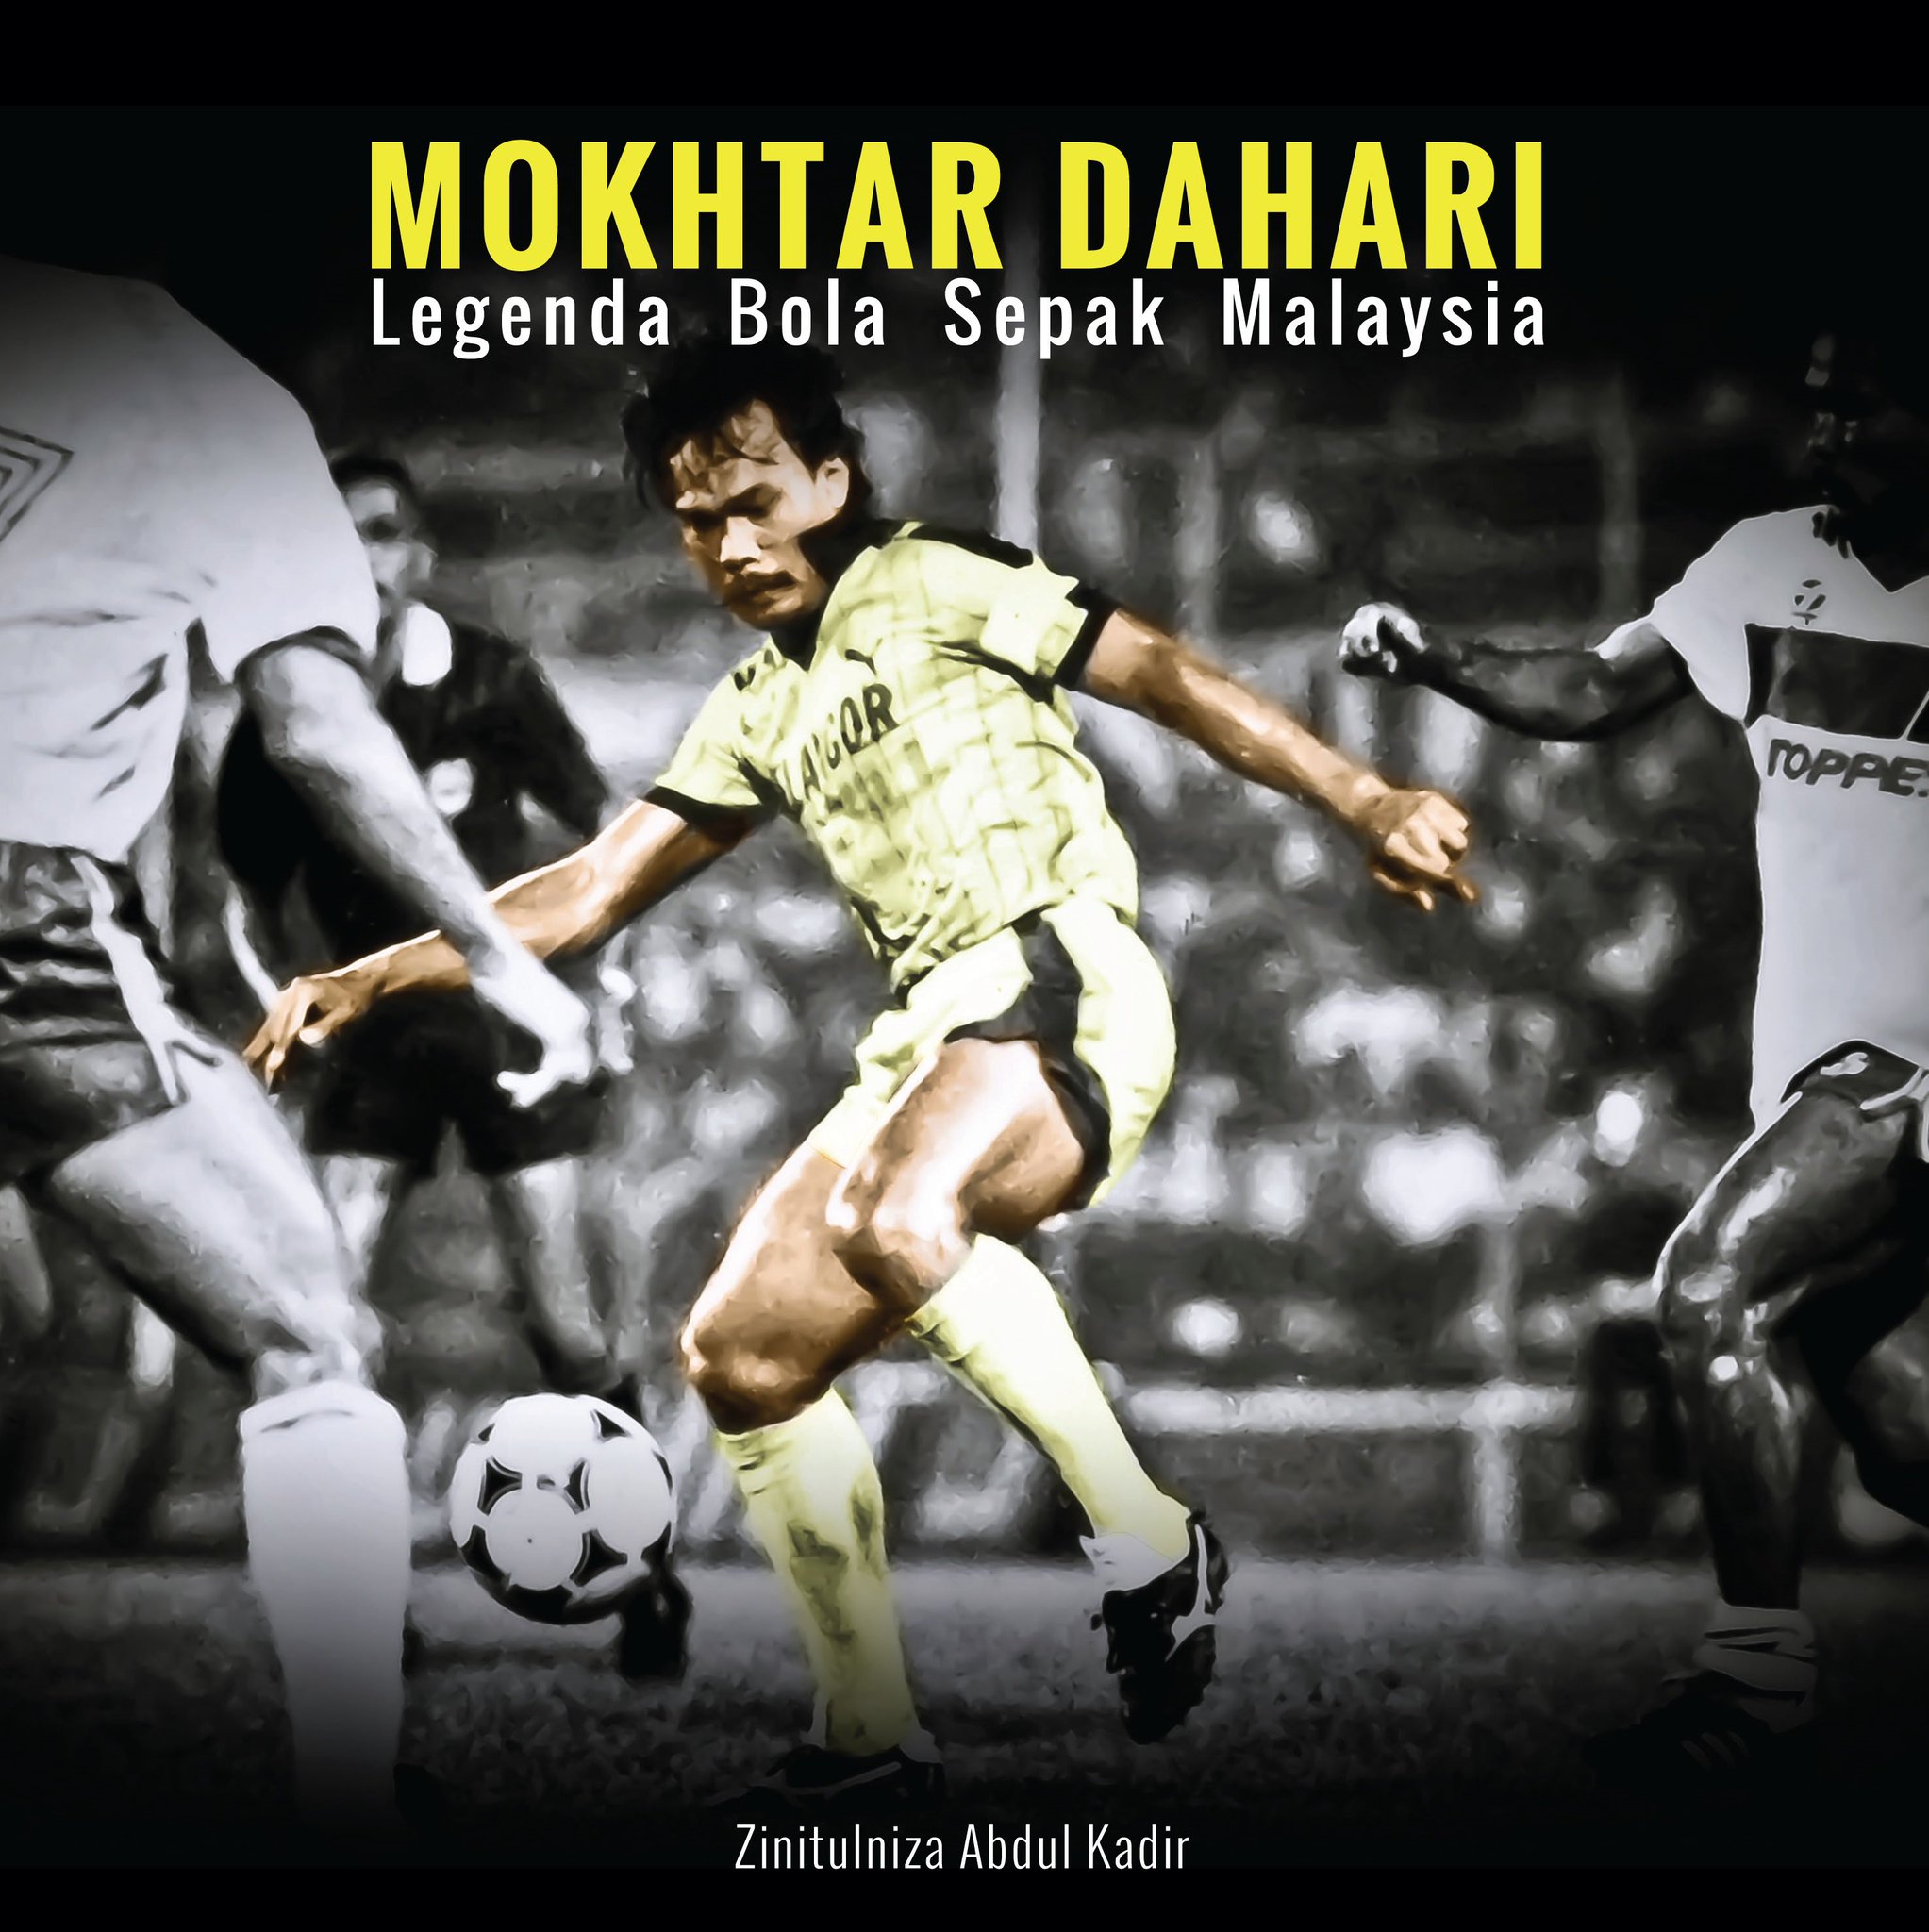 He would\ve been 64 today. Happy birthday, Mokhtar Dahari. 